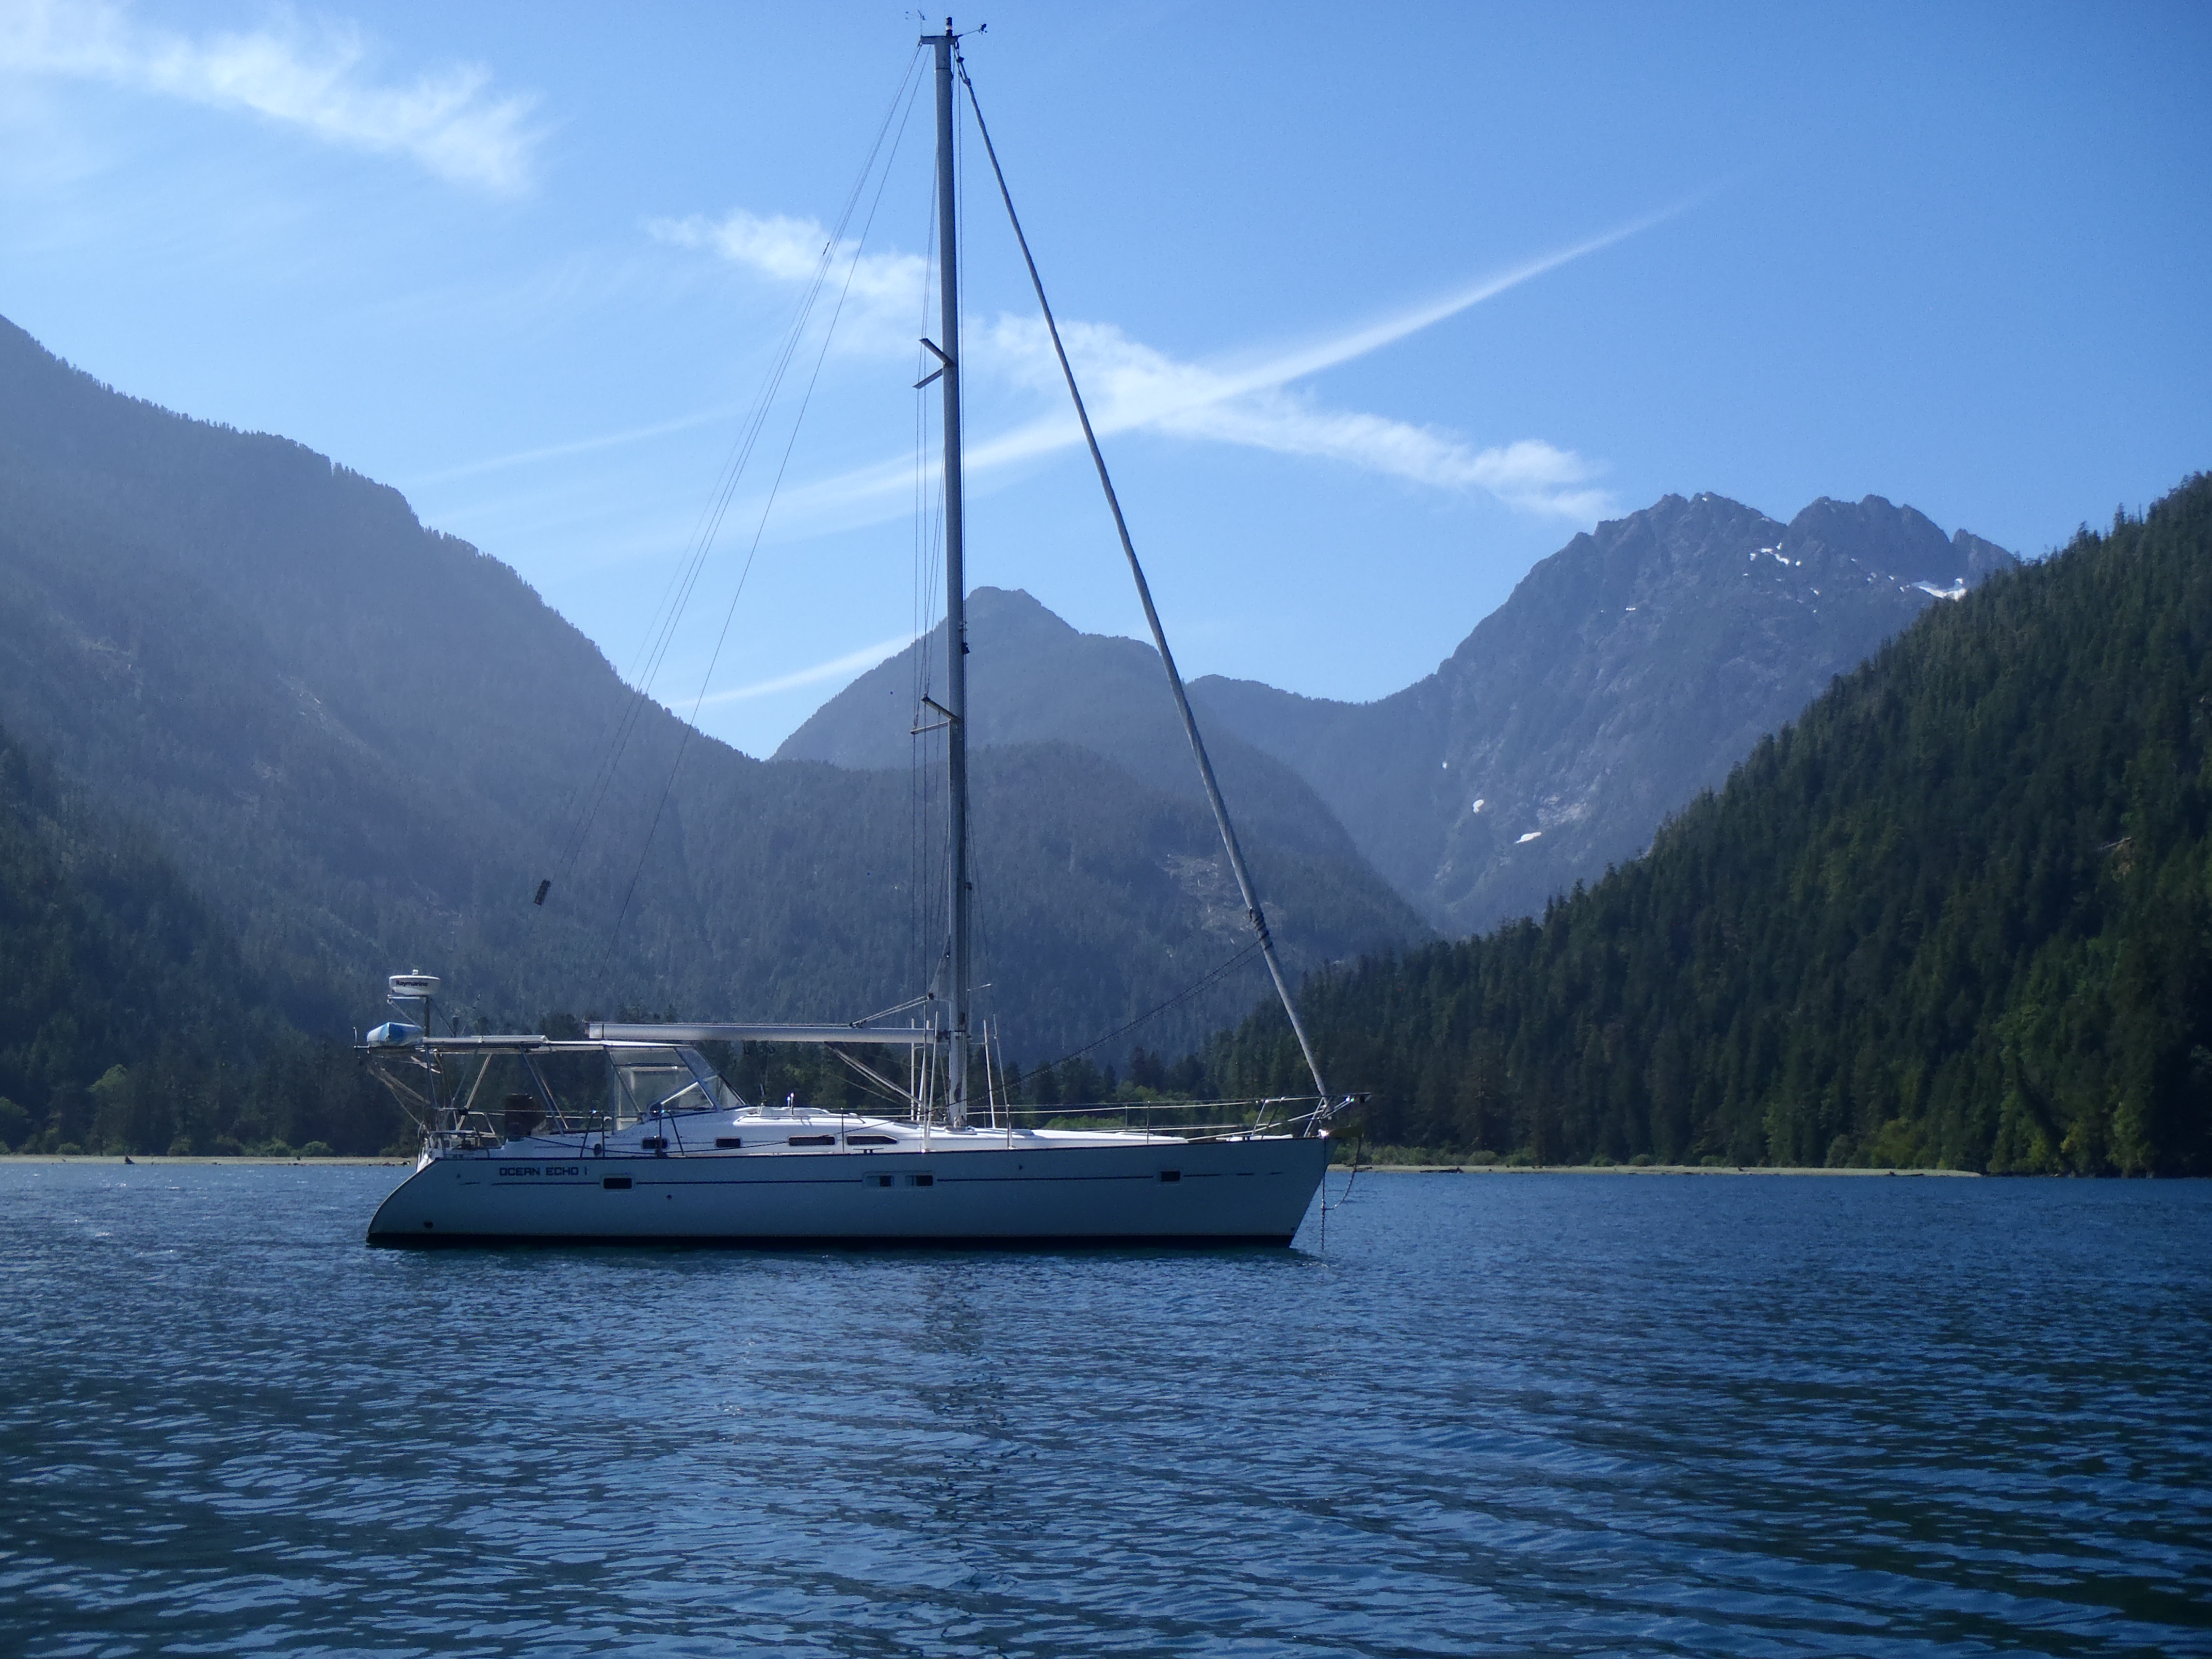 2007 Beneteau 423 Sailboat for sale in British Columbia, Canada - image 8 